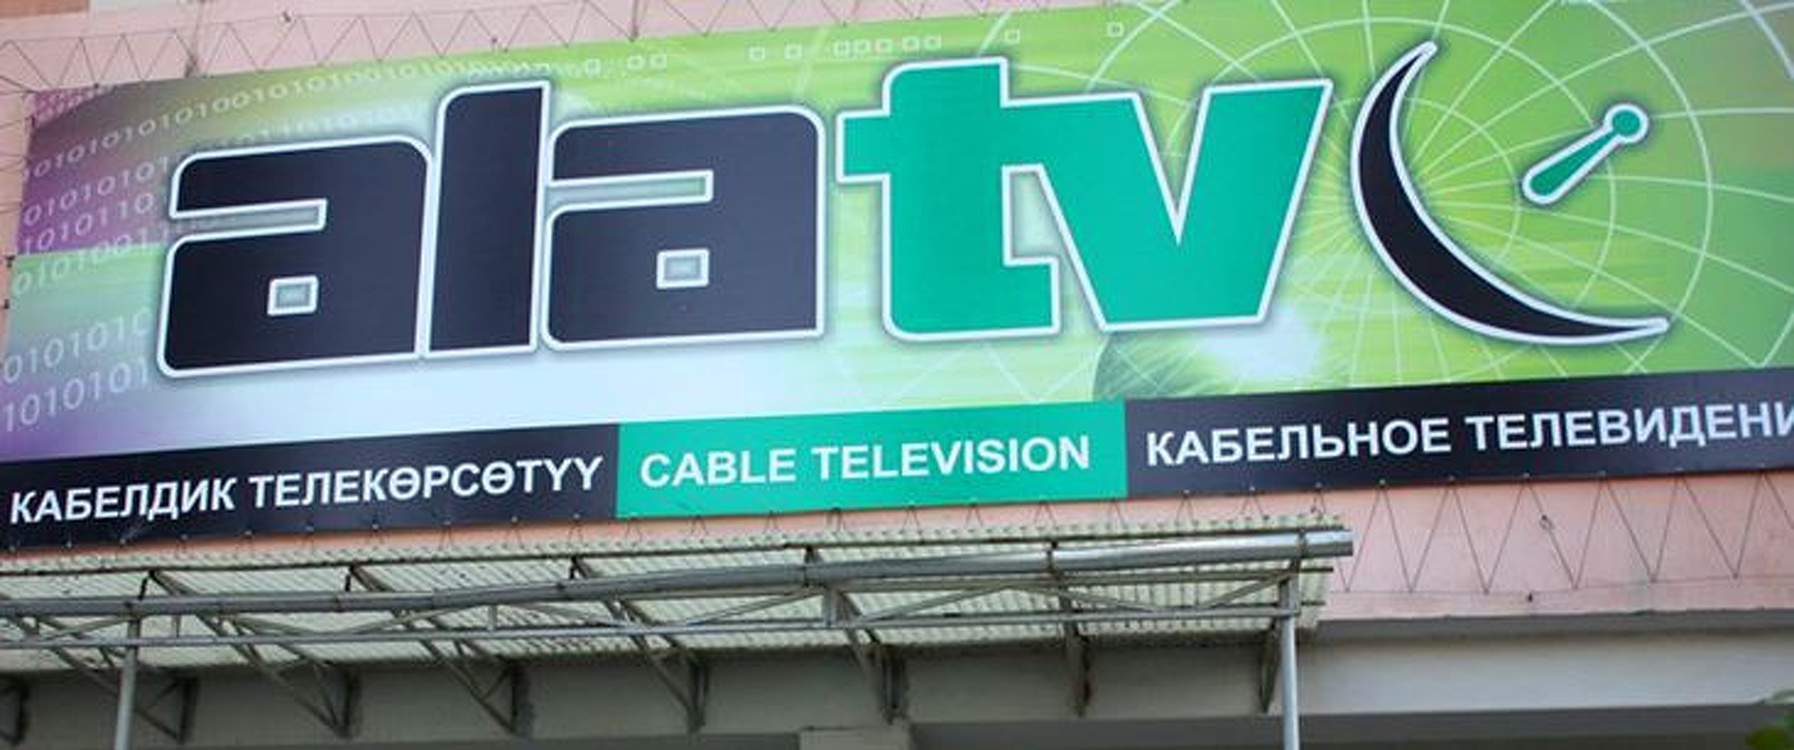 Ала тв. Логотип ала ТВ. Ала ТВ контакты. Ала ТВ Бишкек Телеканалы.